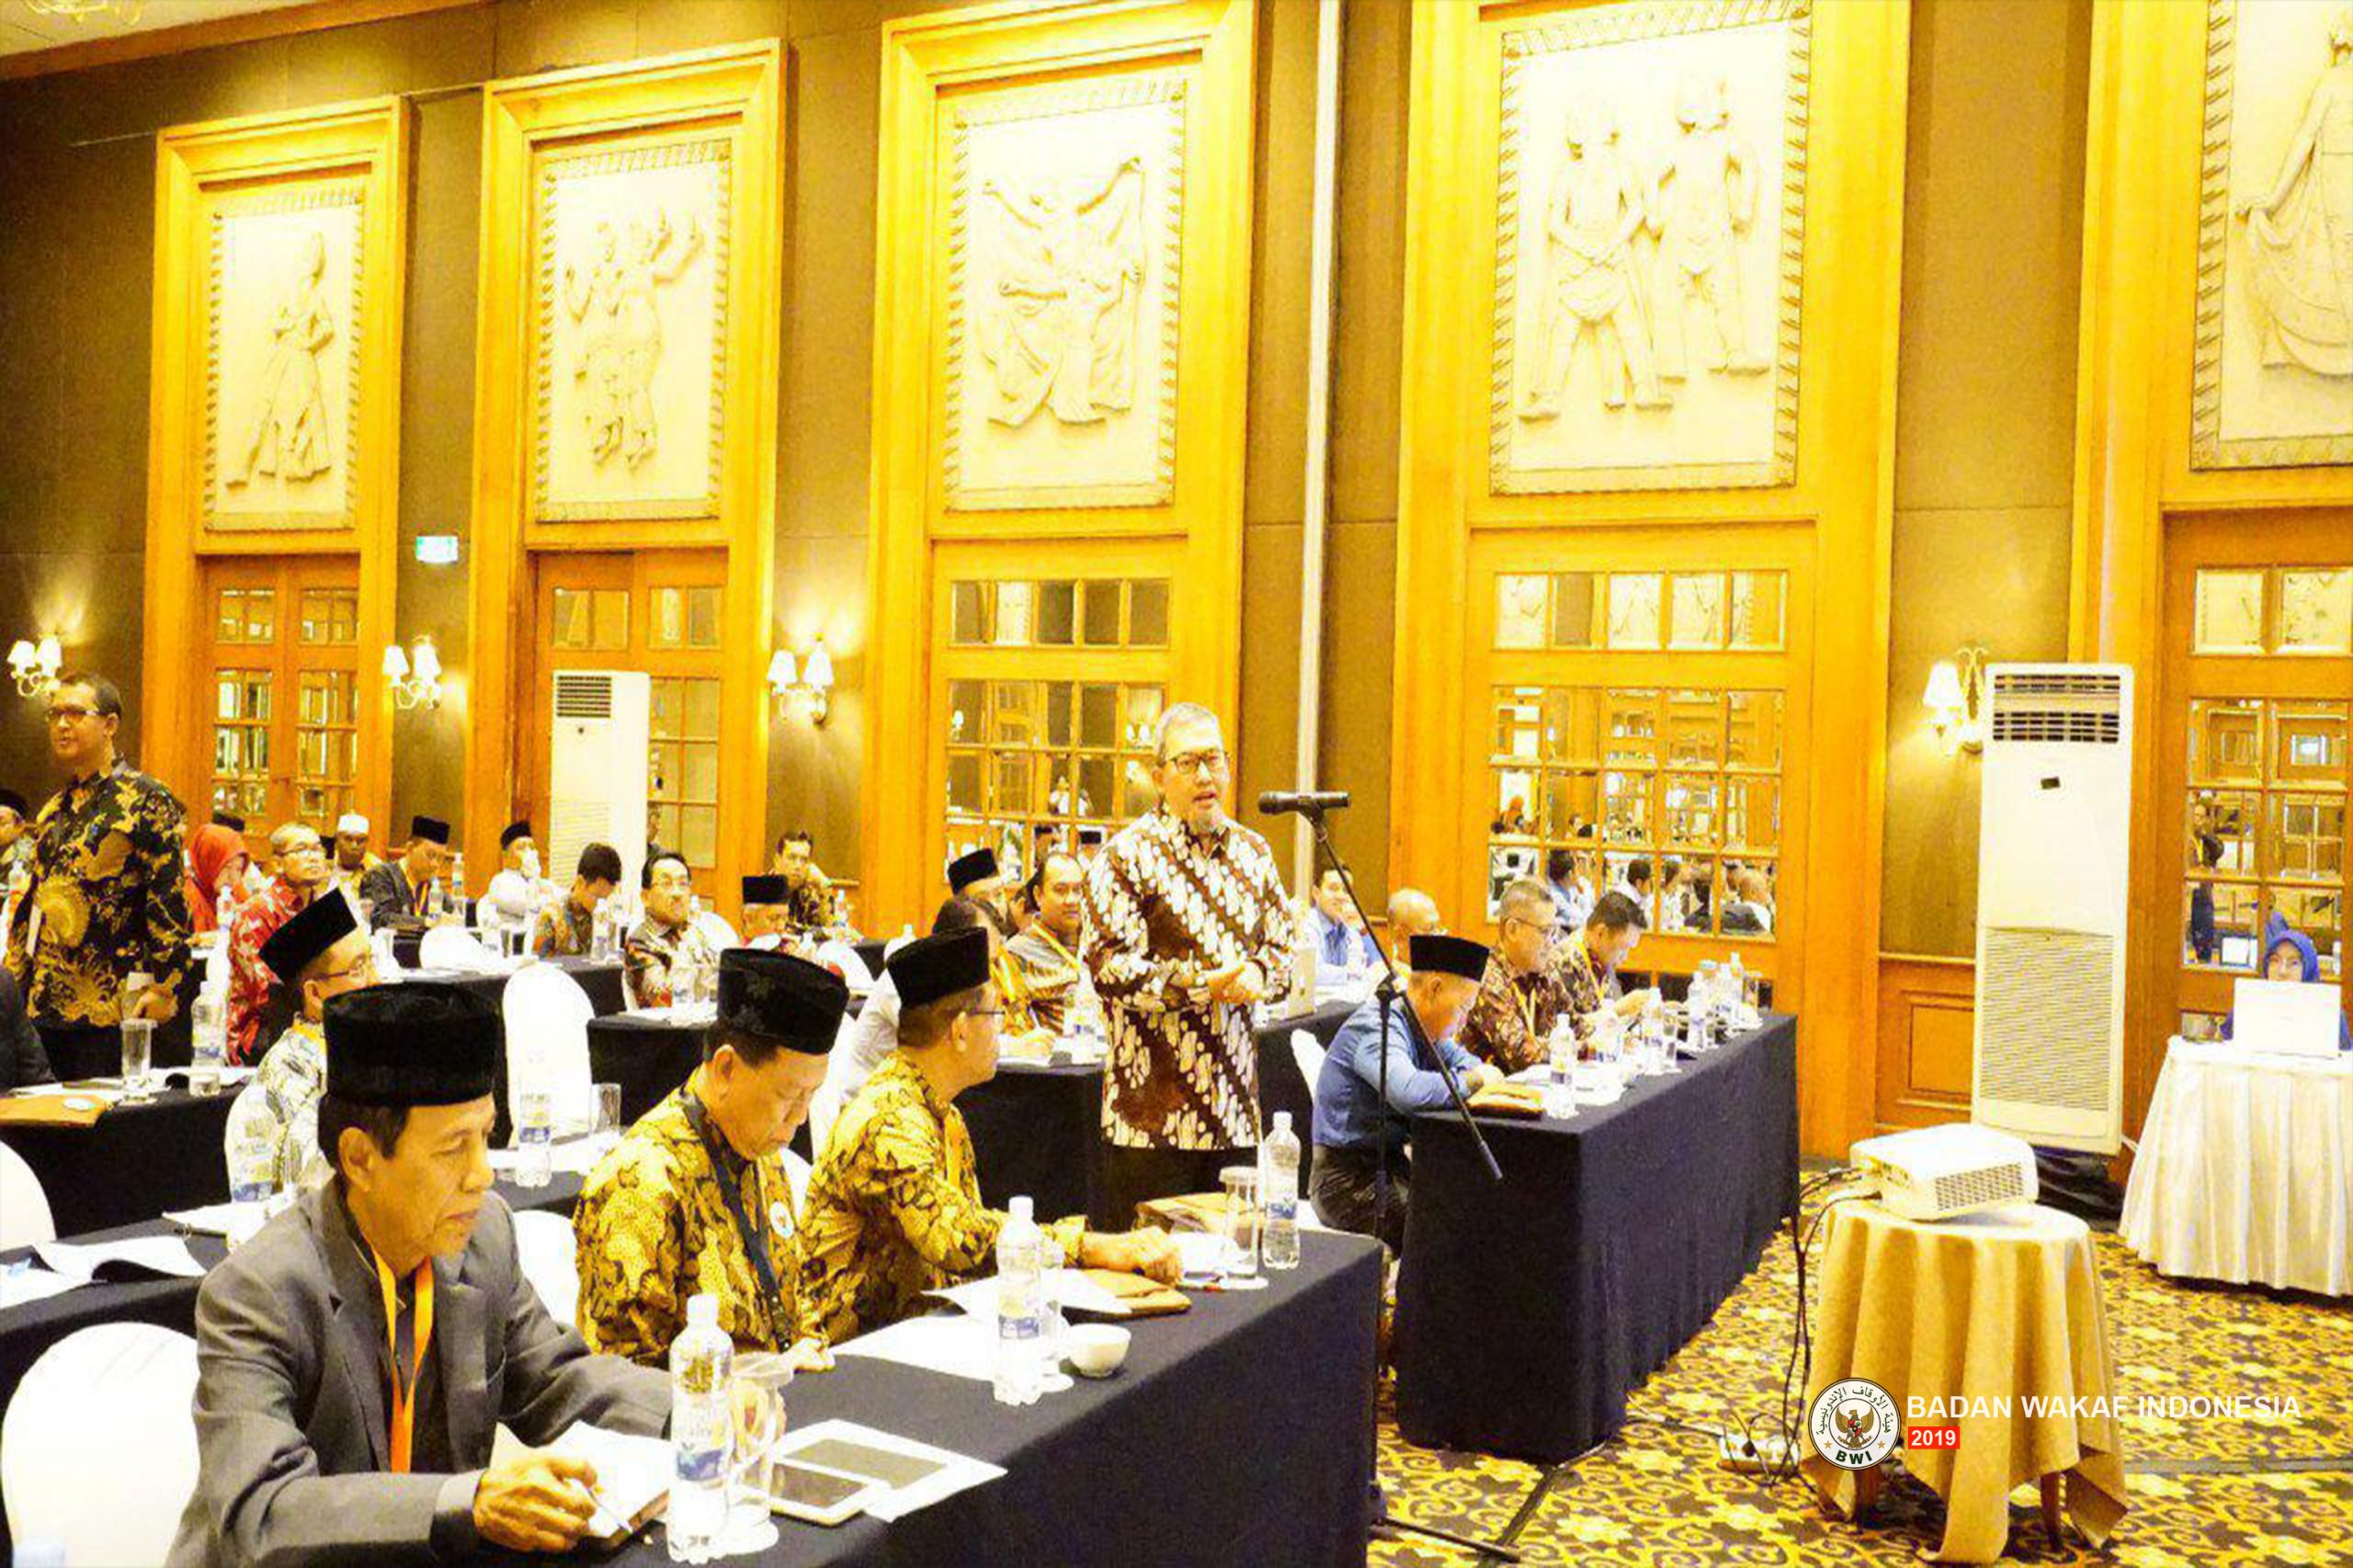 Poin-poin Rekomendasi Rakornas Badan Wakaf Indonesia 2019